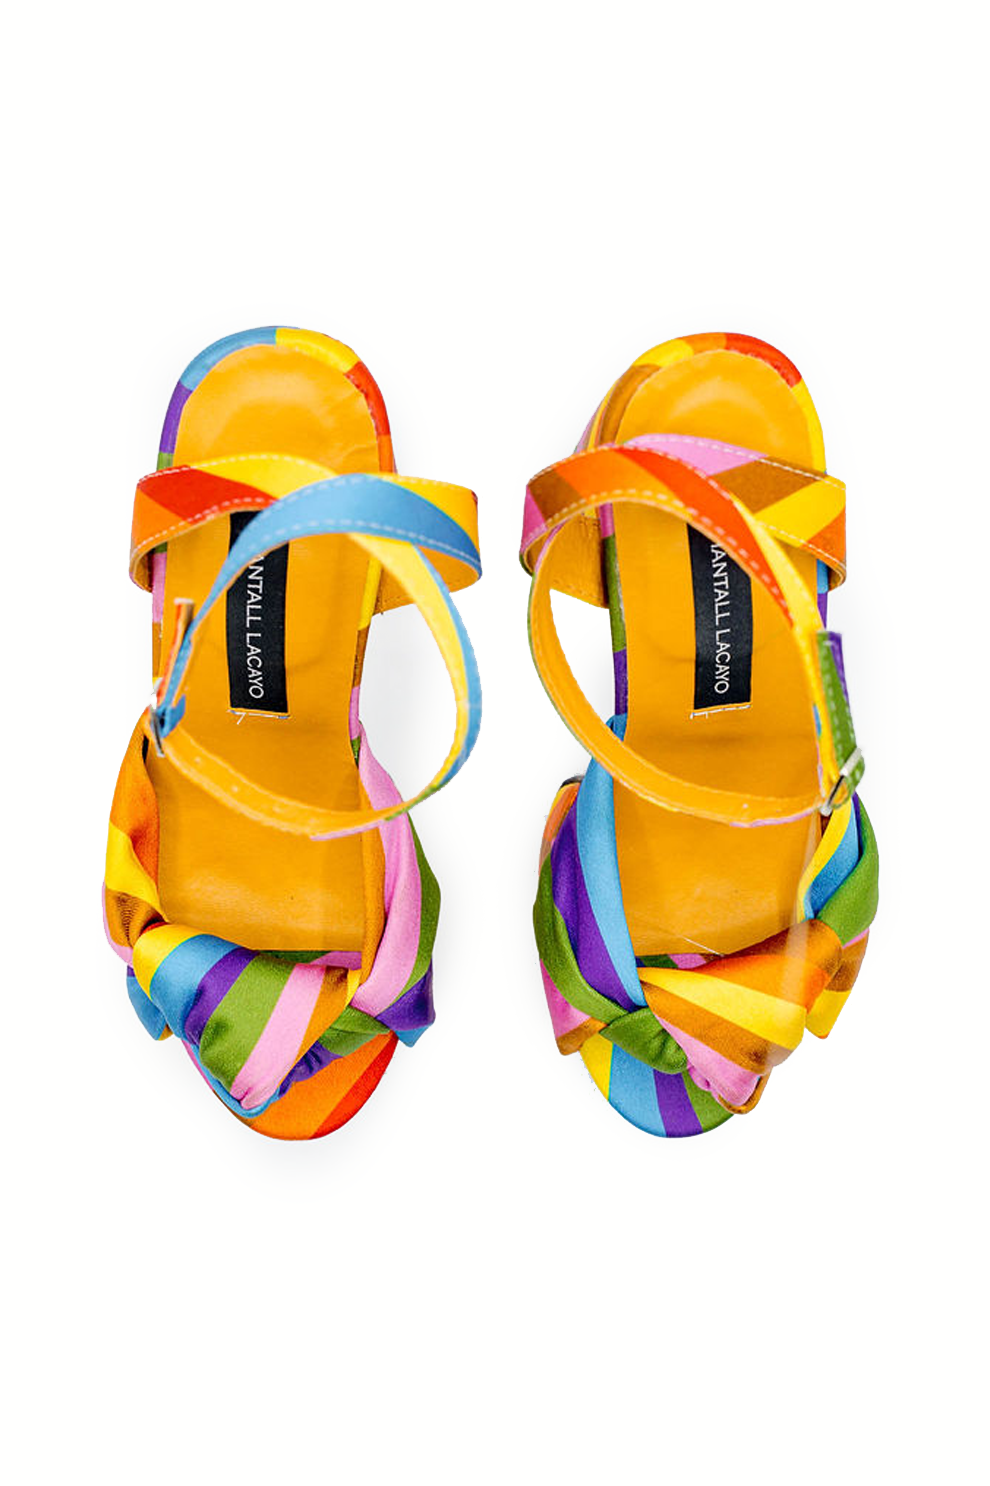 Rainbow Platforms Sandals - Shantall Lacayo